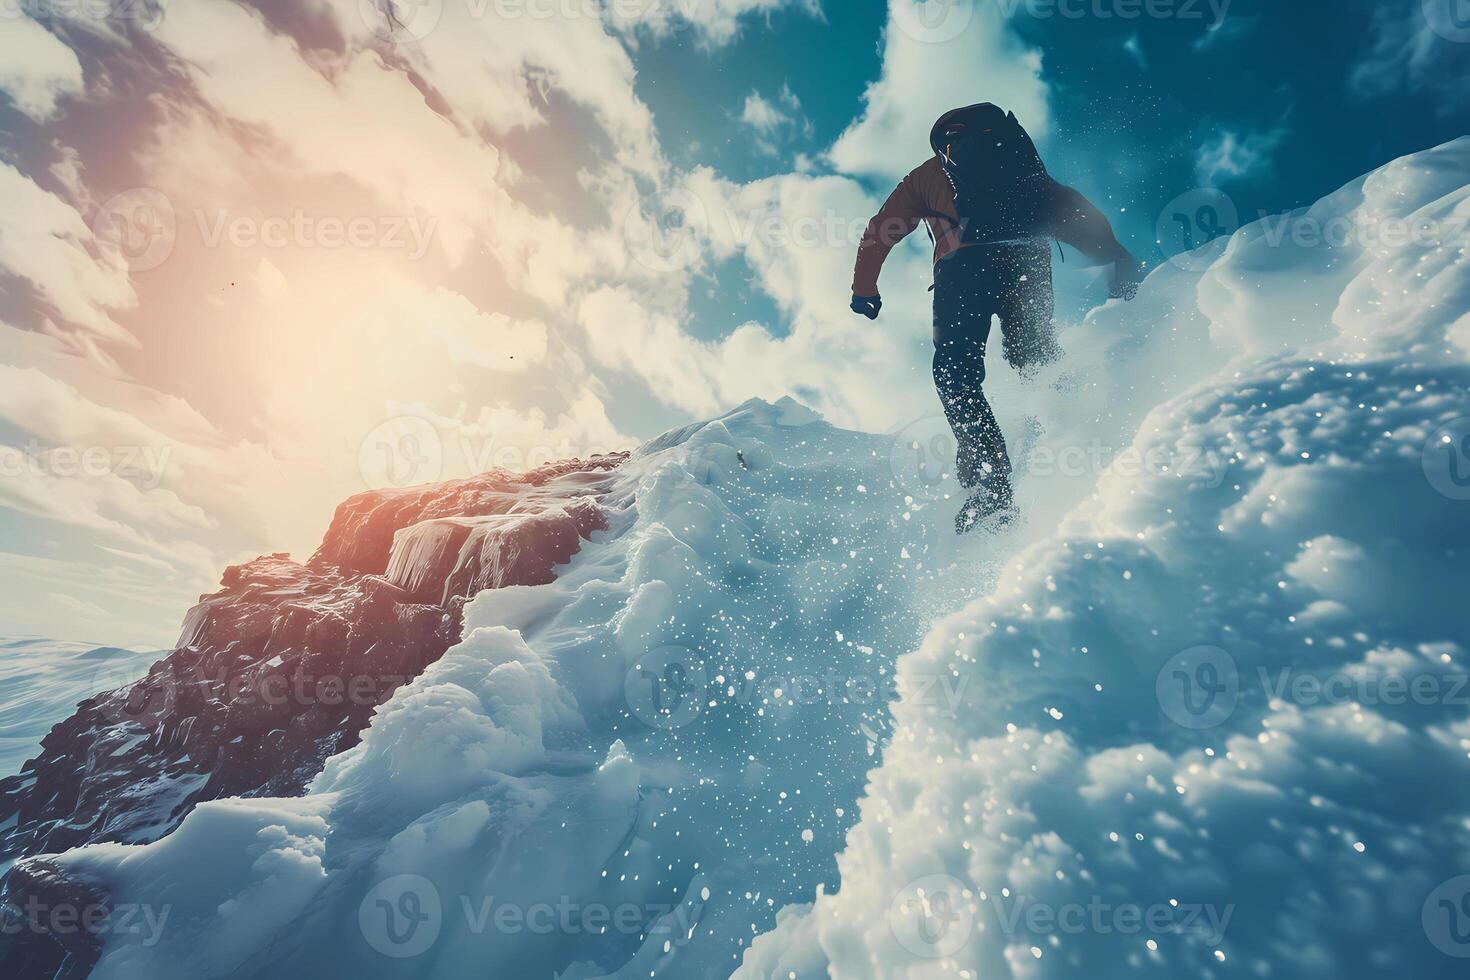 AI generated Adventurer Climbing Snowy Mountain Peak at Sunrise photo